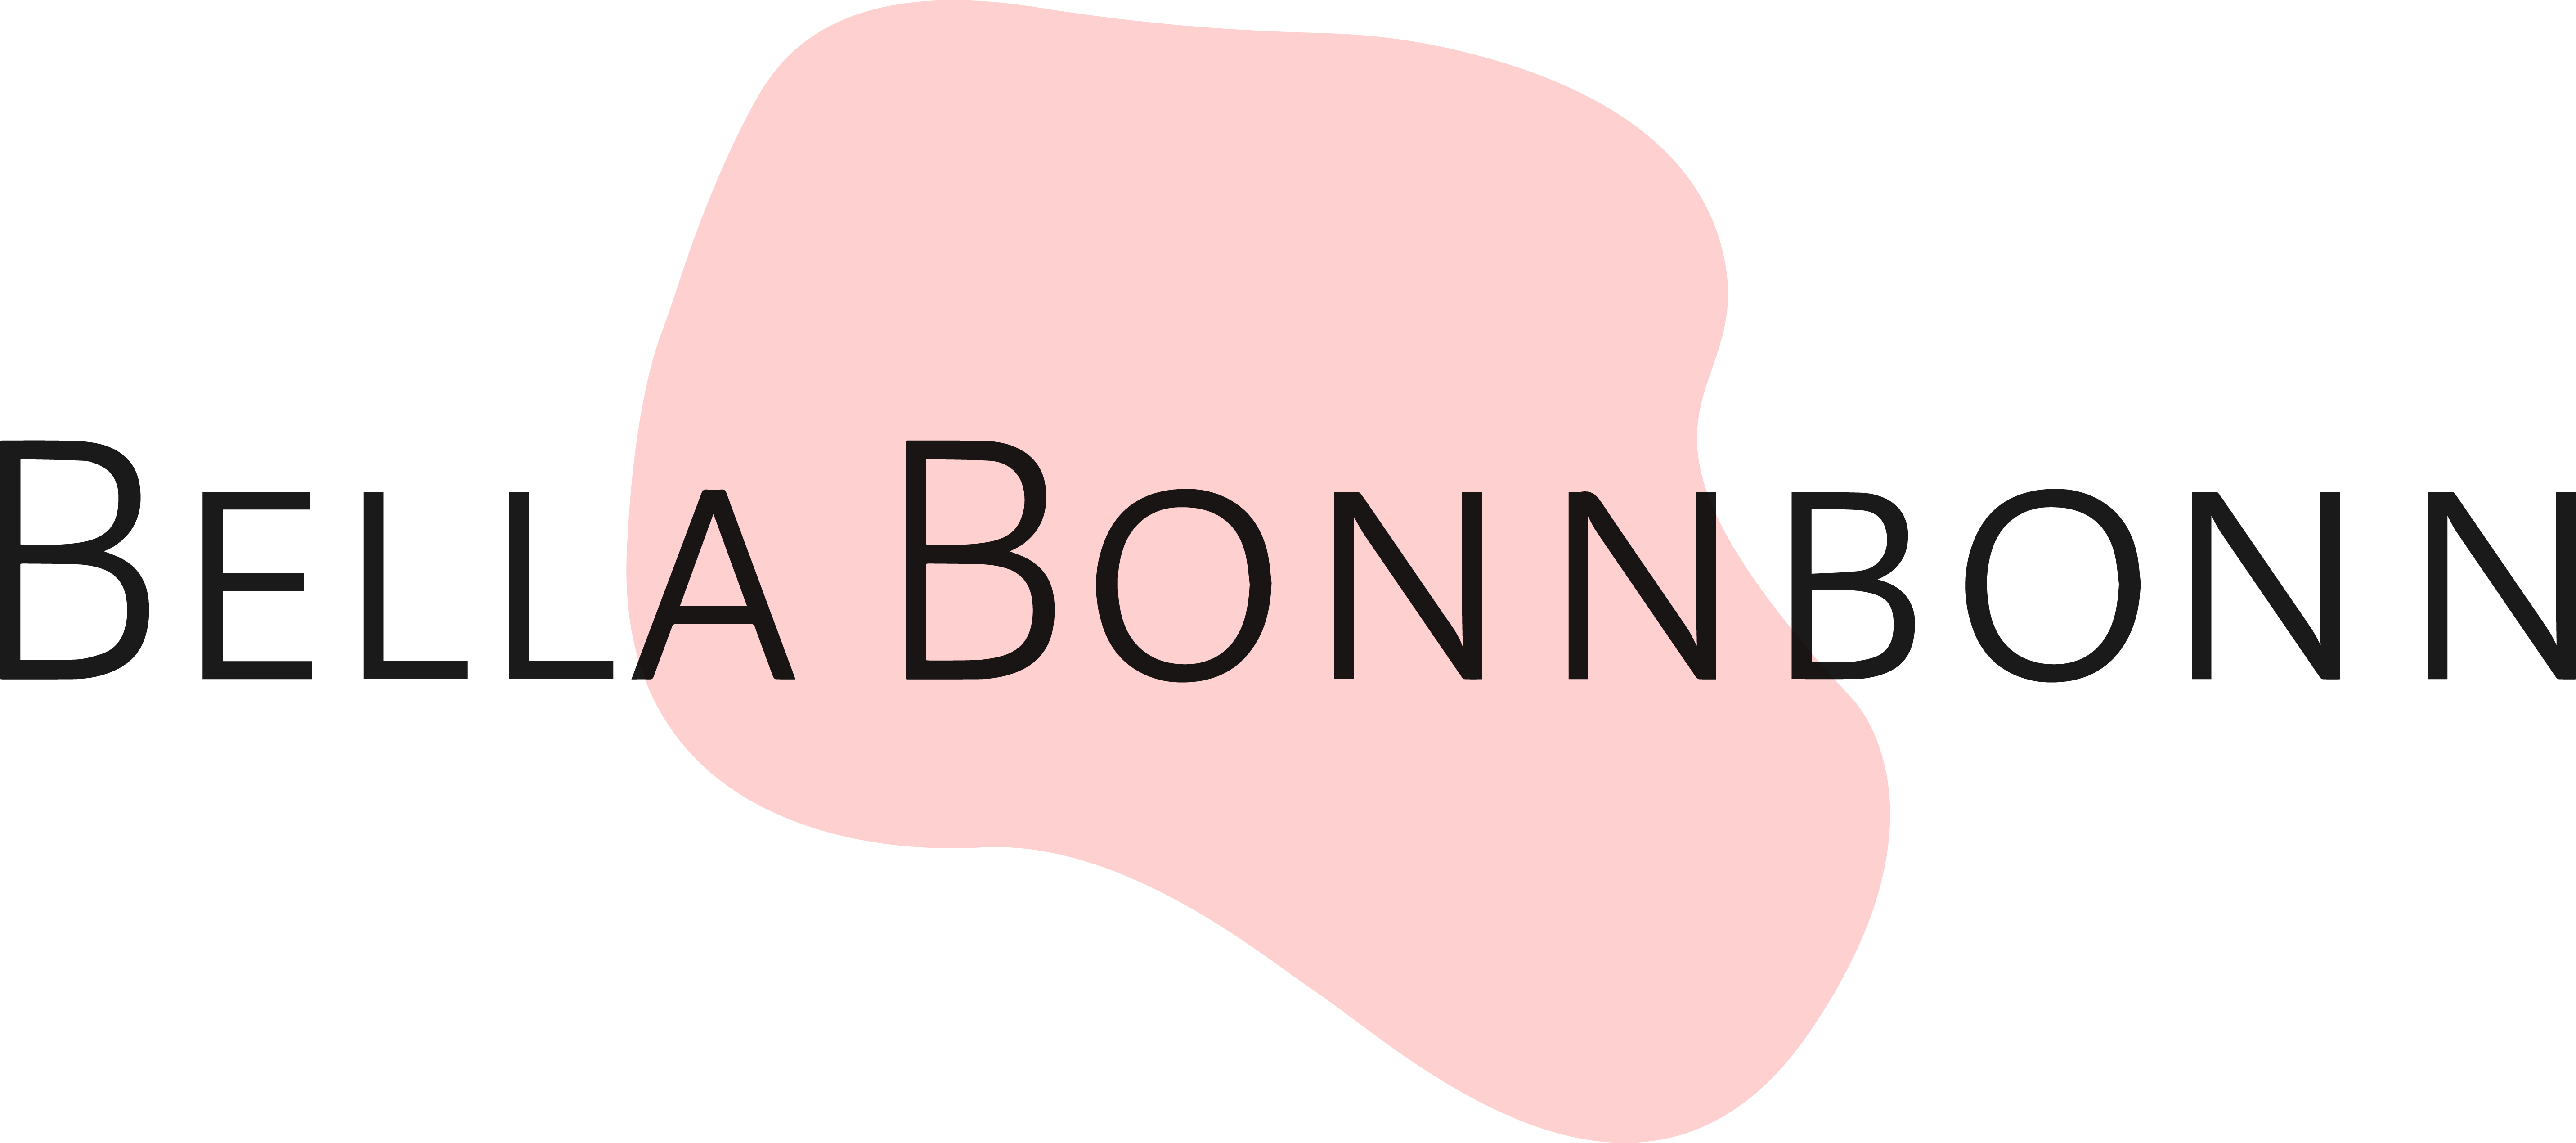 bella bonnbonn logo